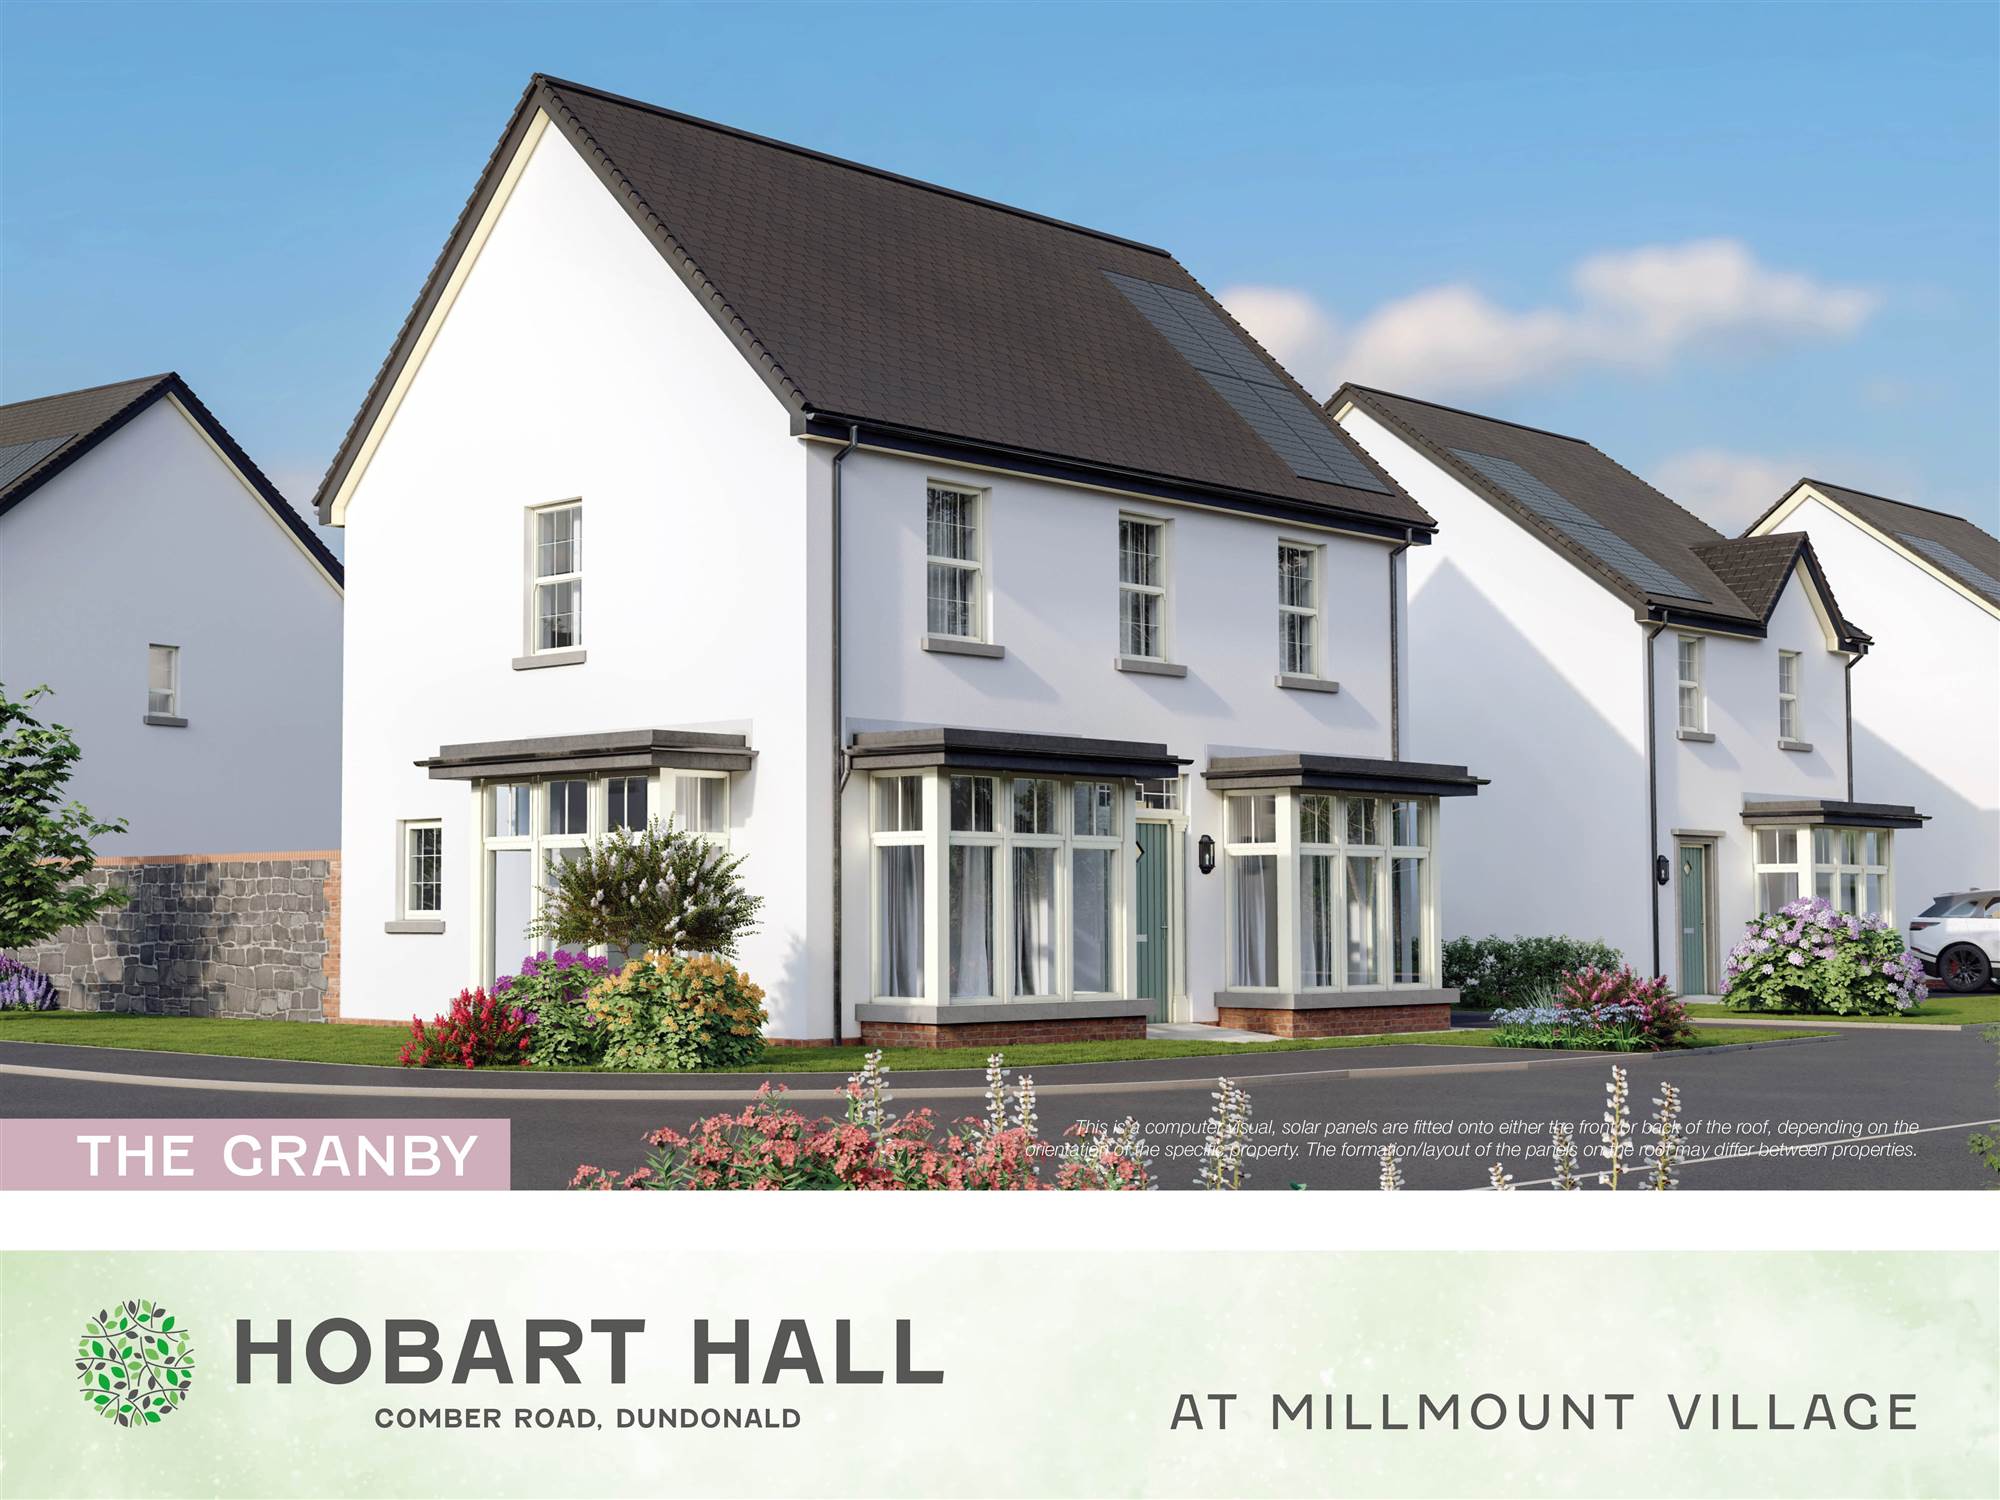 8 Hobart Hall at Millmount Village